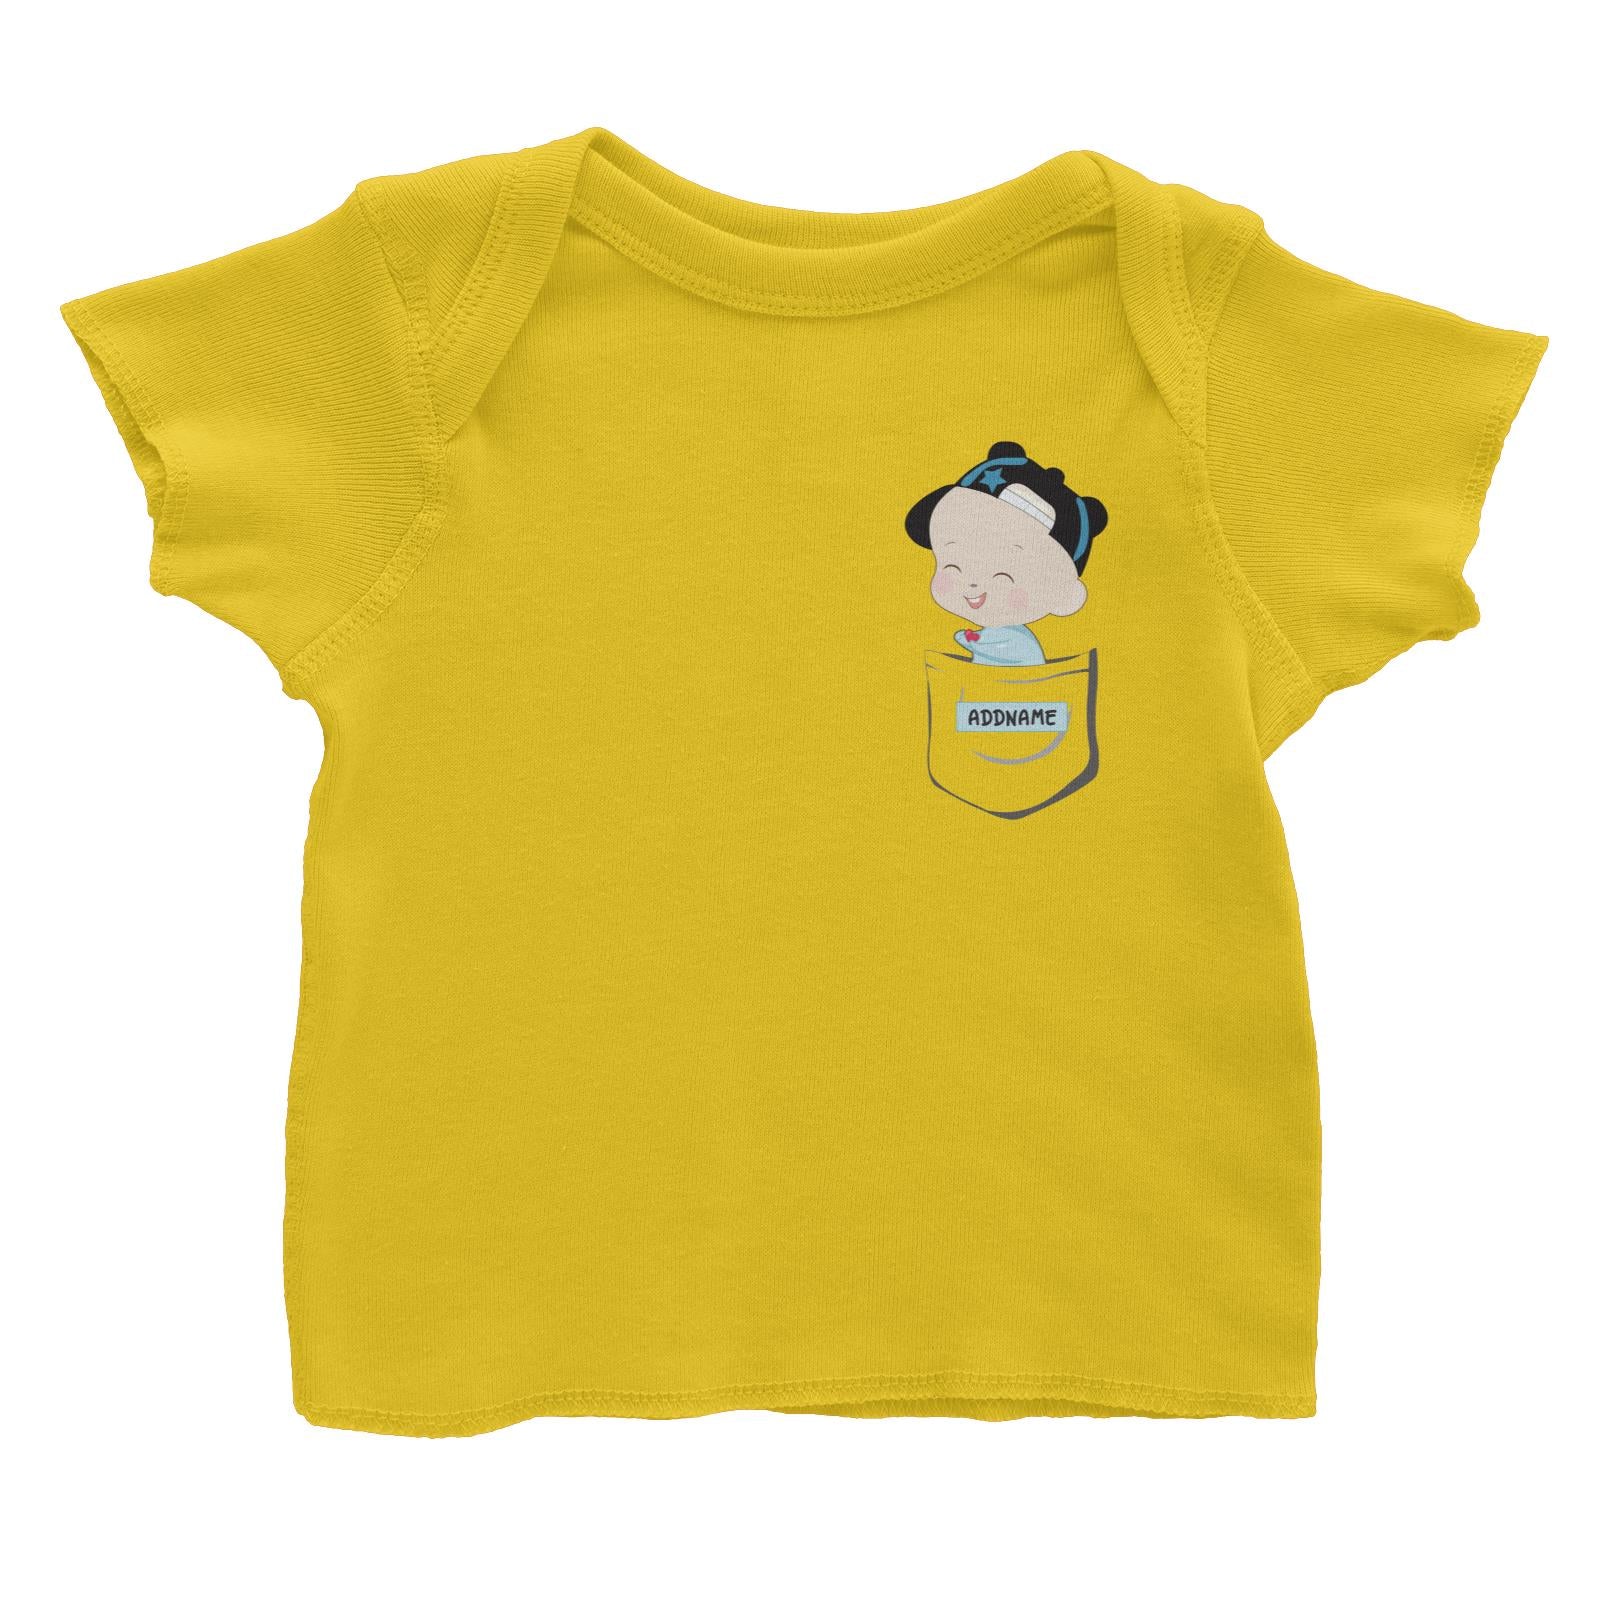 Love Family Pocket Baby Boy Addname Baby T-Shirt